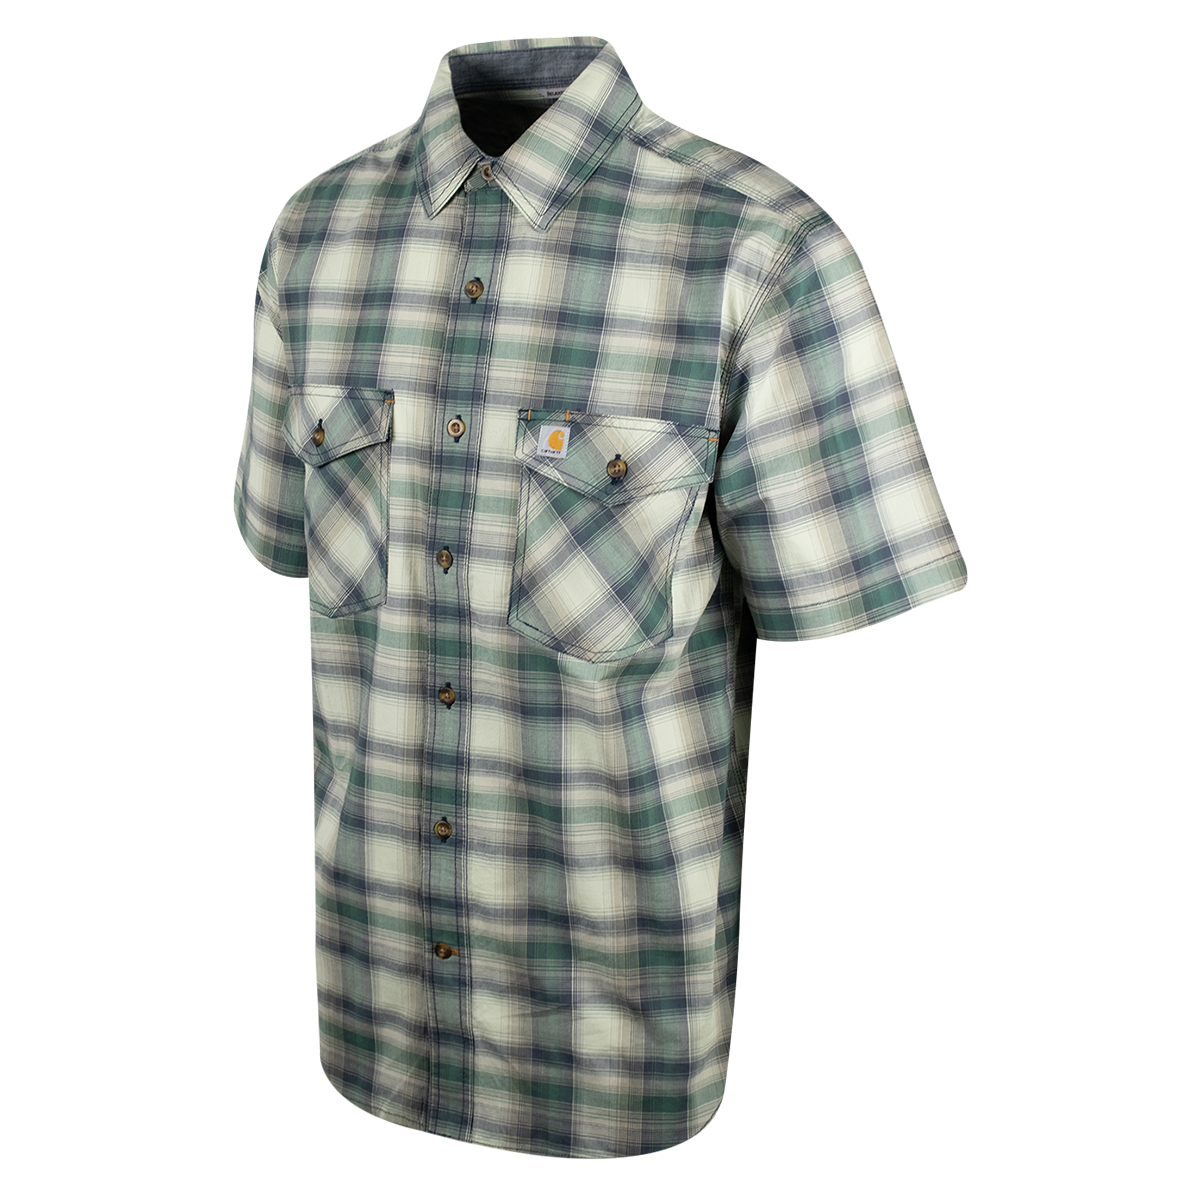 Carhartt Men's Green Grey Navy Plaid Relaxed Fit S/S Woven Shirt (S17)